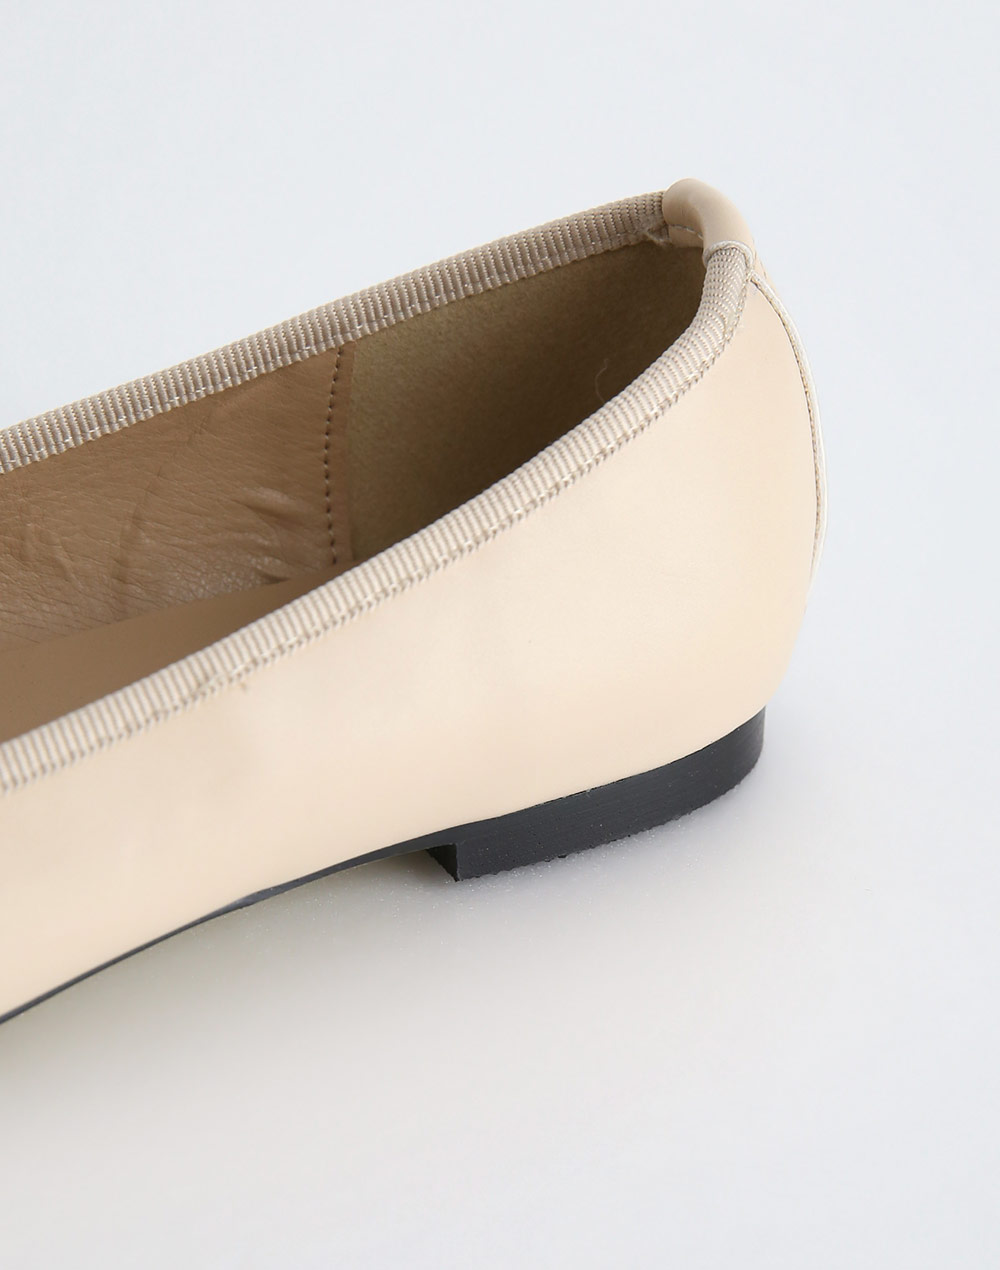 bi-color flat shoes・s279356（シューズ/フラット）| chipichan.1215 | 東京ガールズマーケット